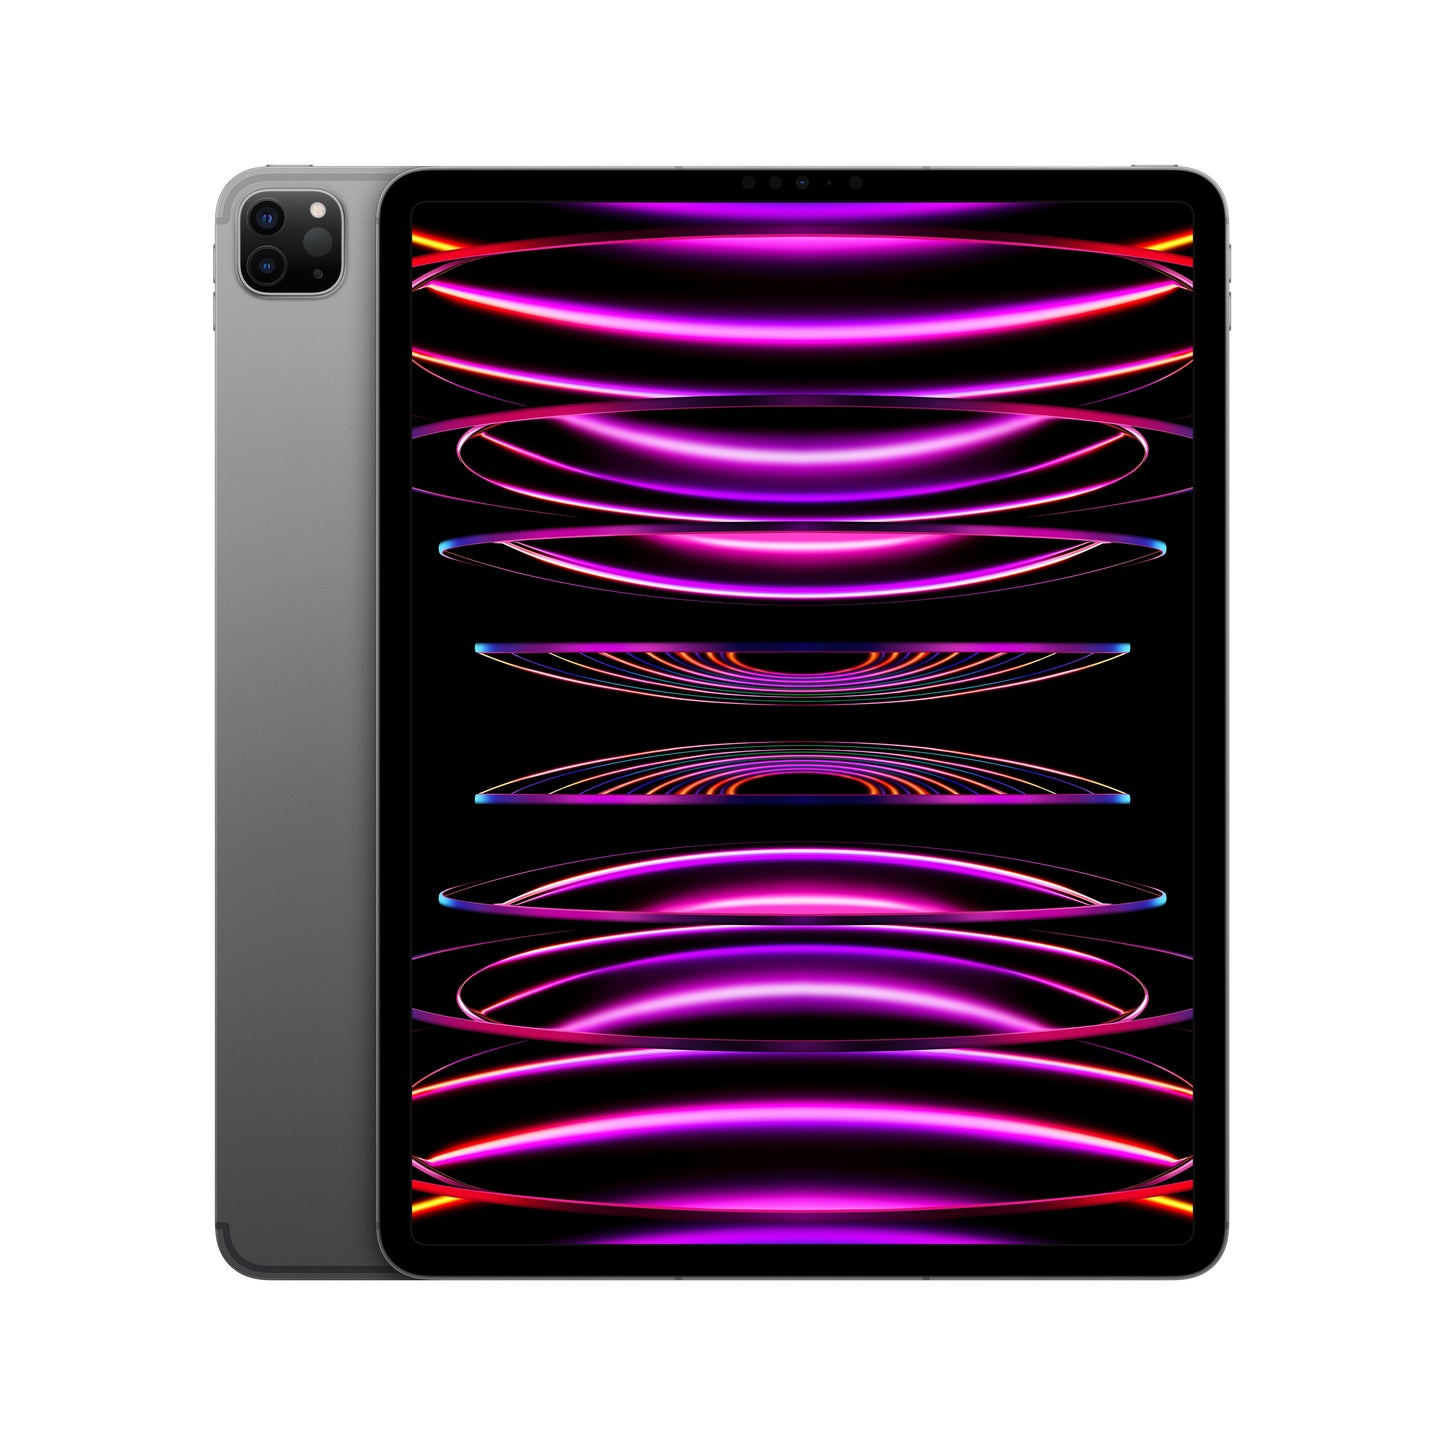 2022 12.9-inch iPad Pro Wi-Fi + Cellular 128GB - Space Gray (6th generation)